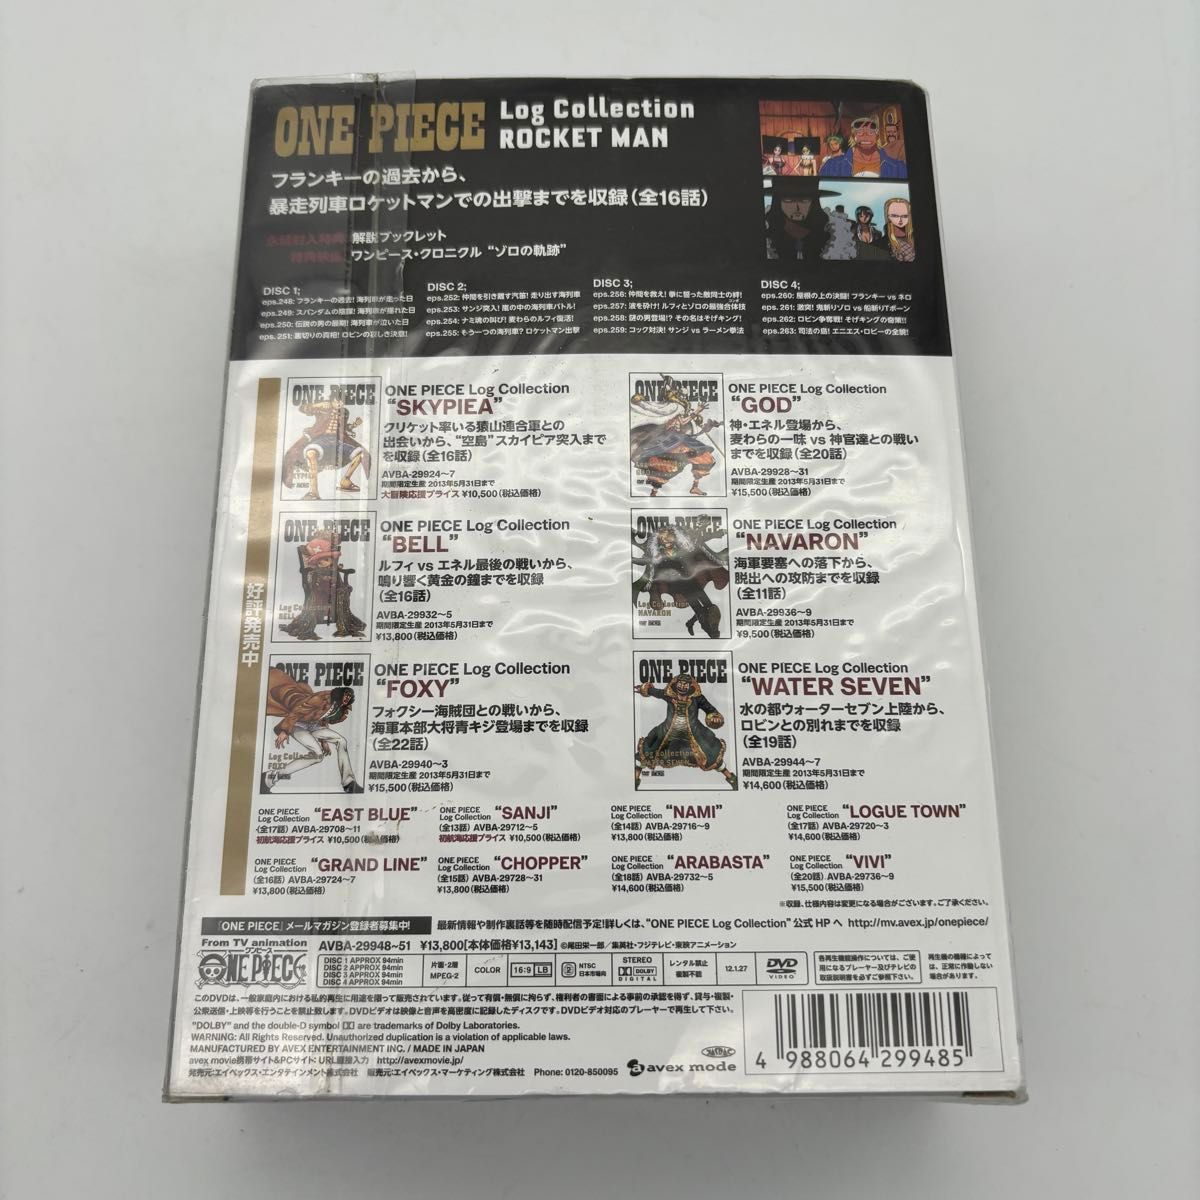 ONE PIECE LOG COLLECTION "ROCKET MAN" [DVD] ワンピース ログコレクション DVD